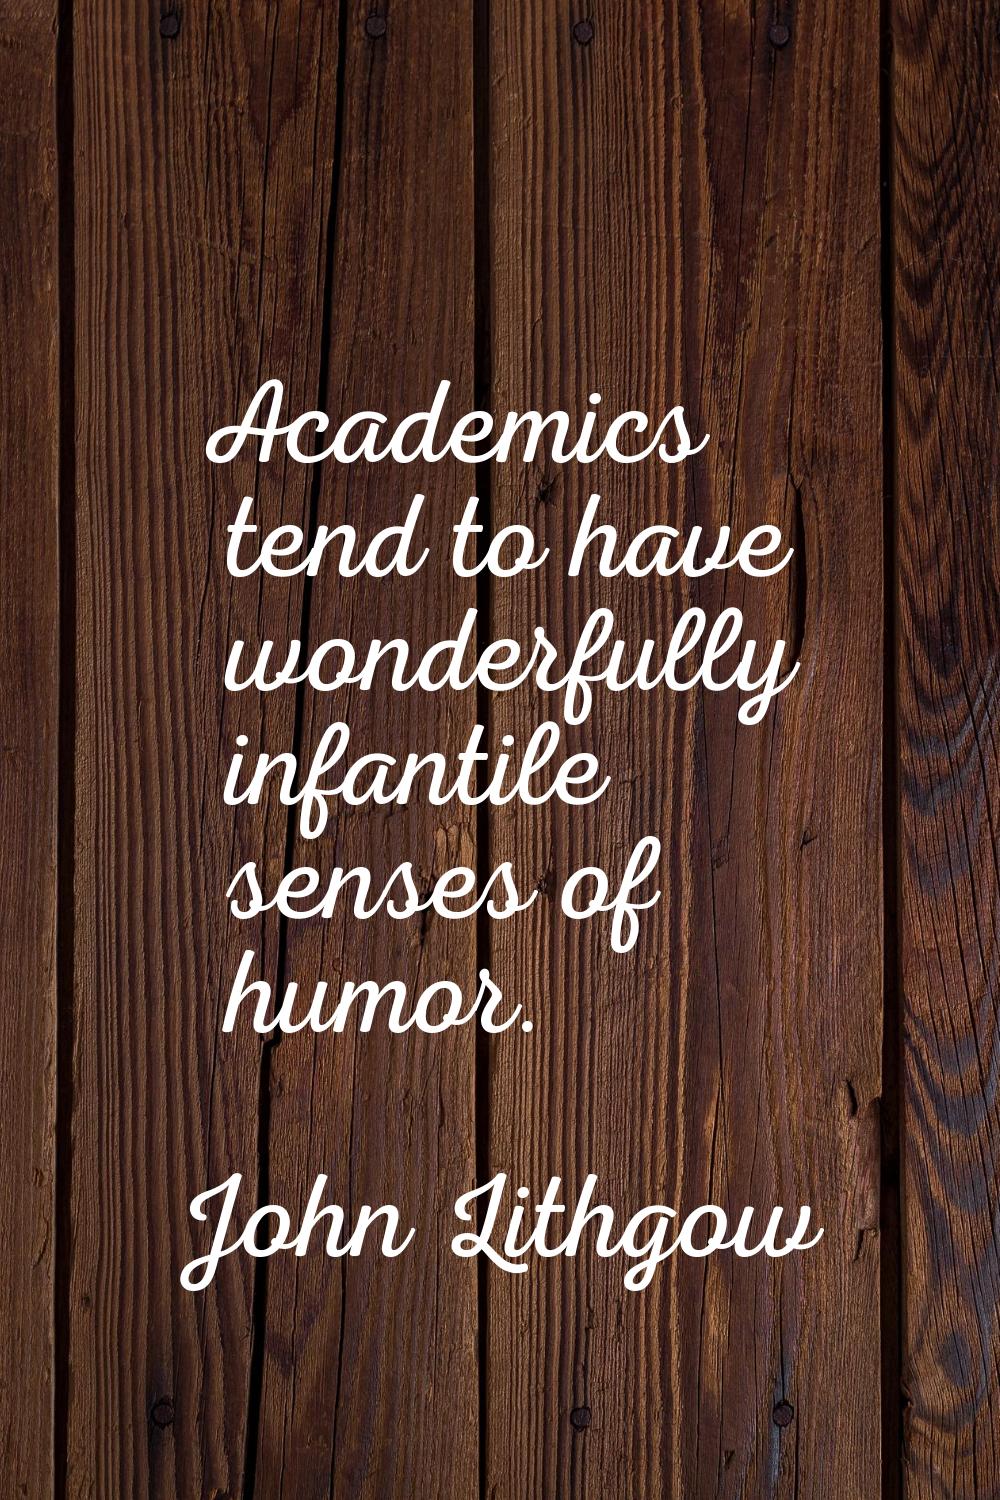 Academics tend to have wonderfully infantile senses of humor.